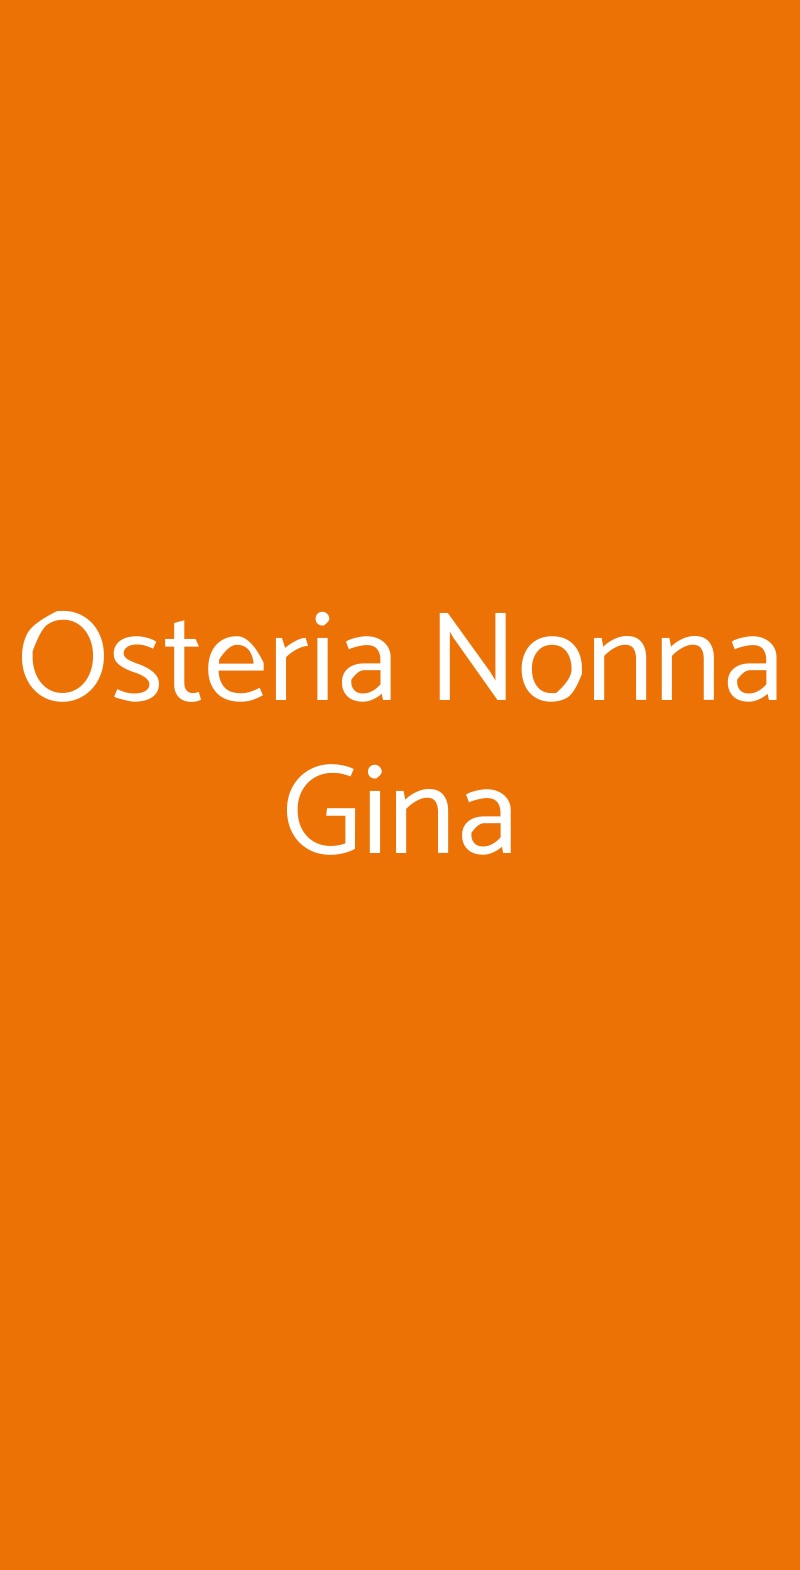 Osteria Nonna Gina Siena menù 1 pagina